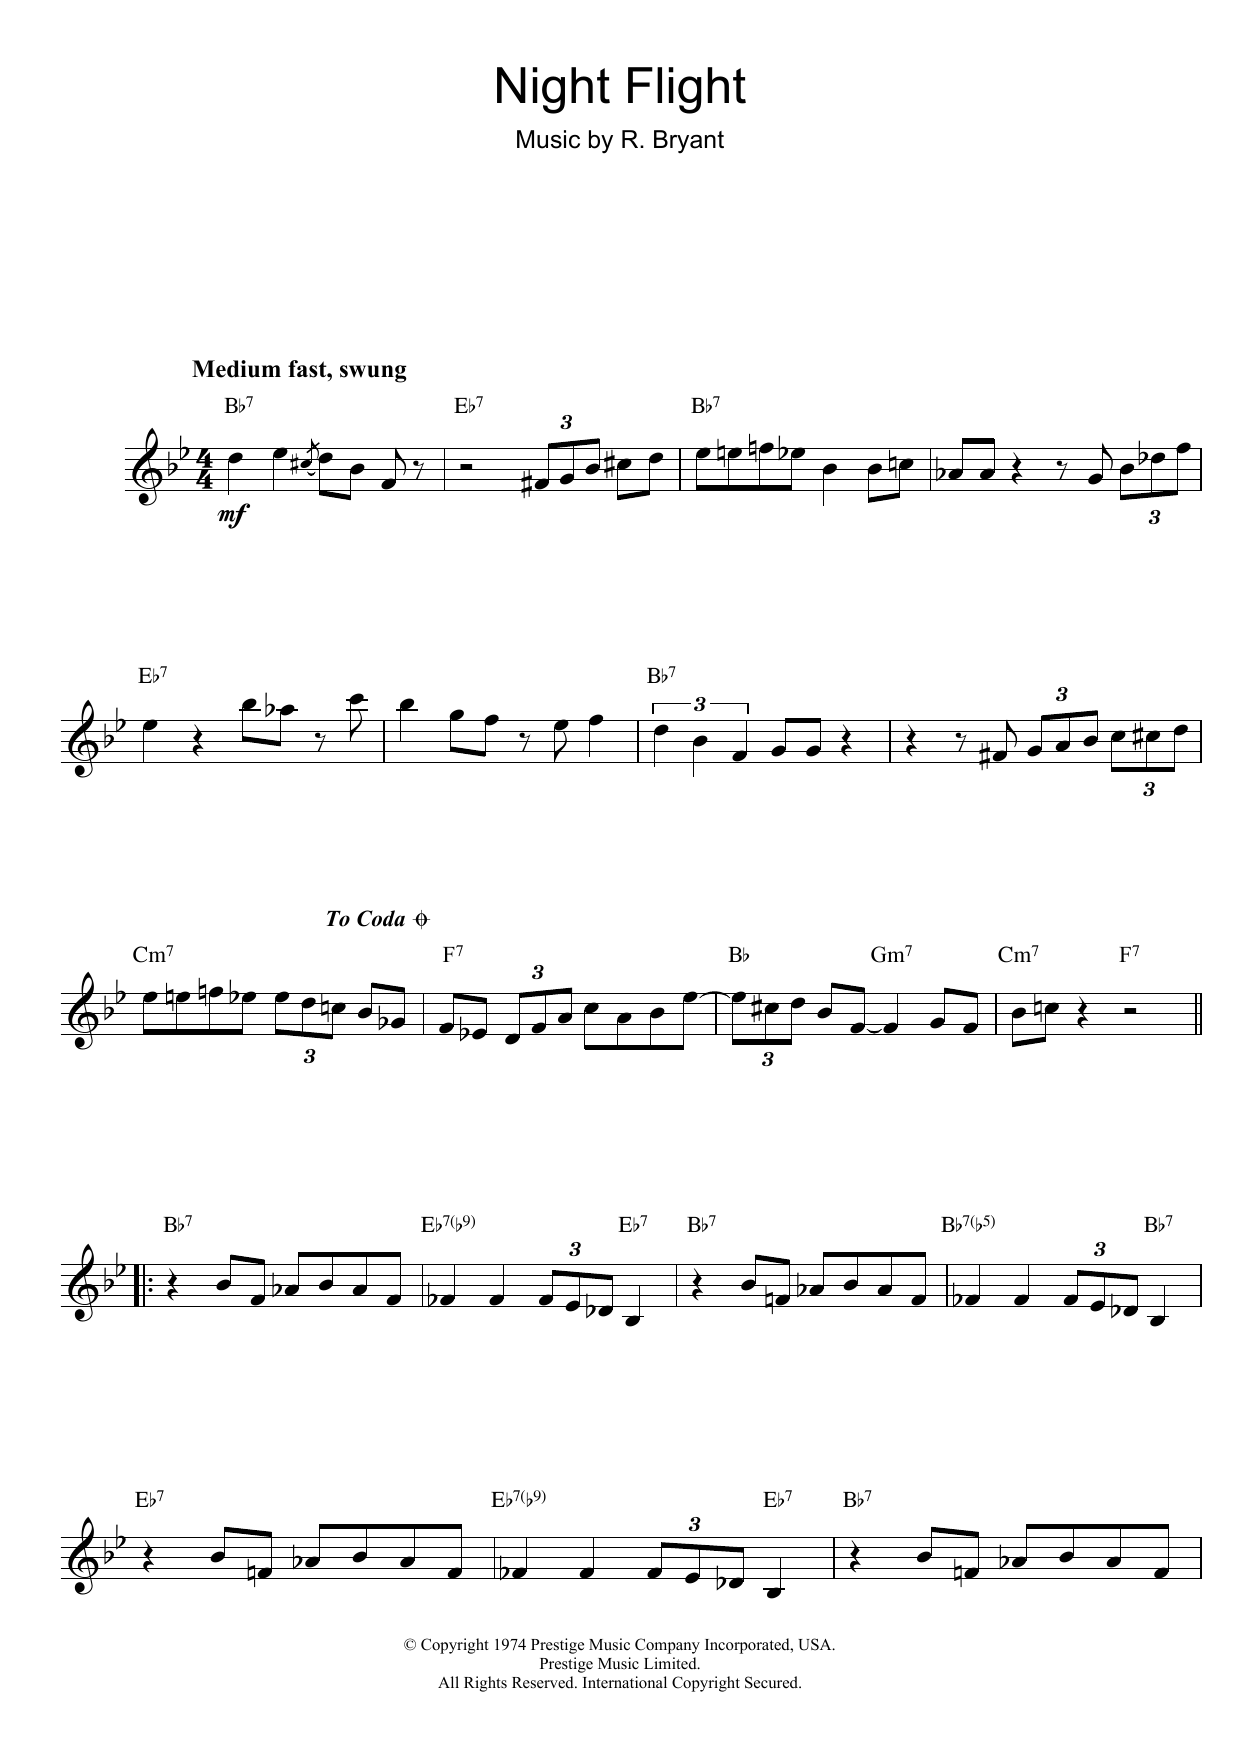 Rusty Bryant Night Flight sheet music notes printable PDF score